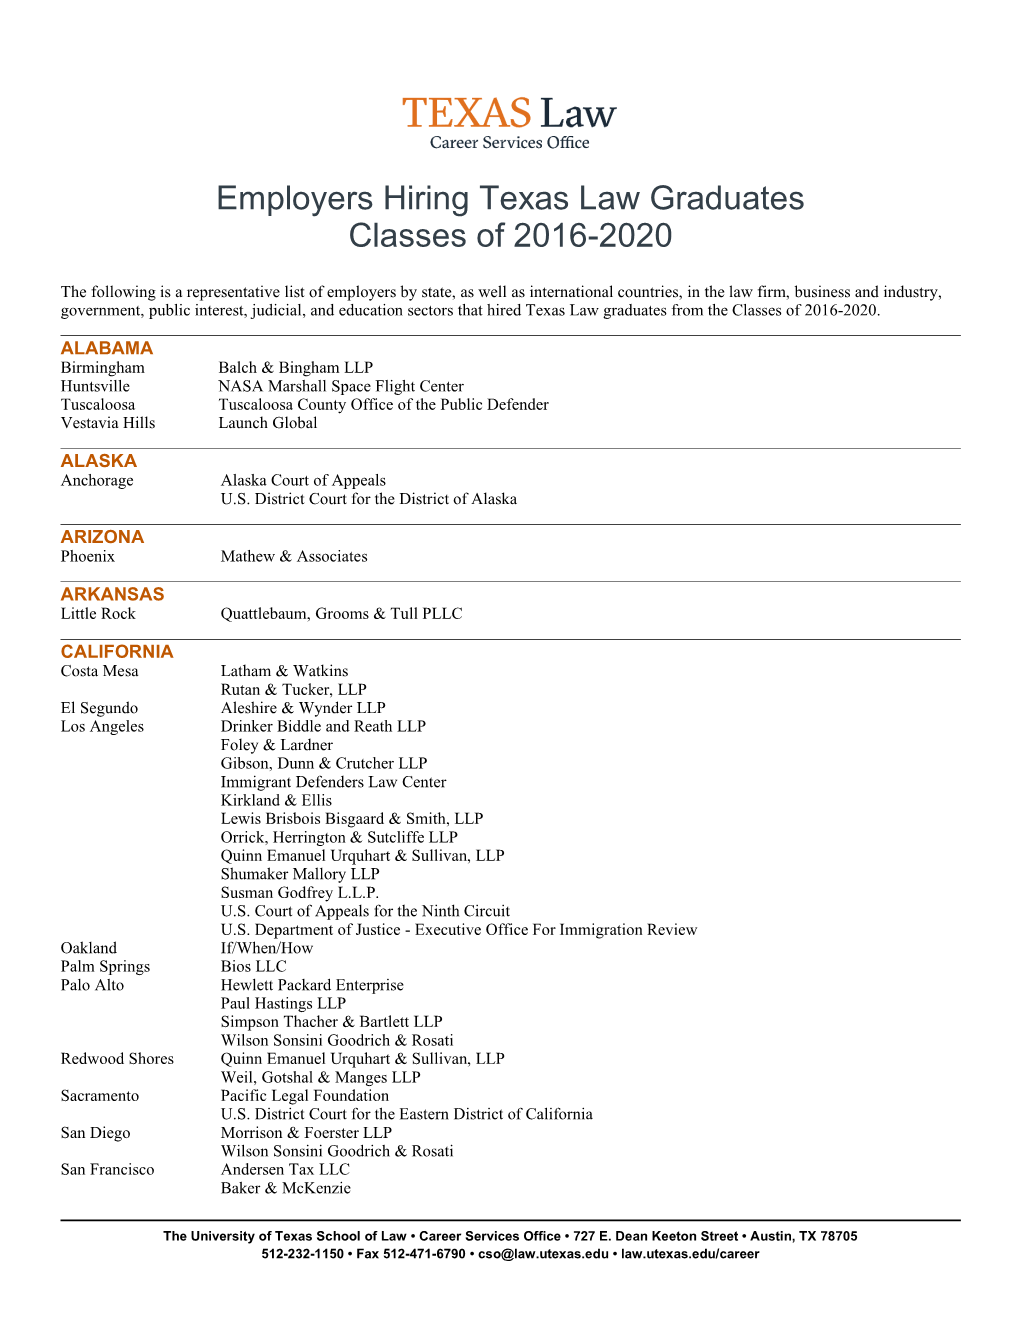 Employers Hiring Texas Law Graduates Classes of 2016-2020